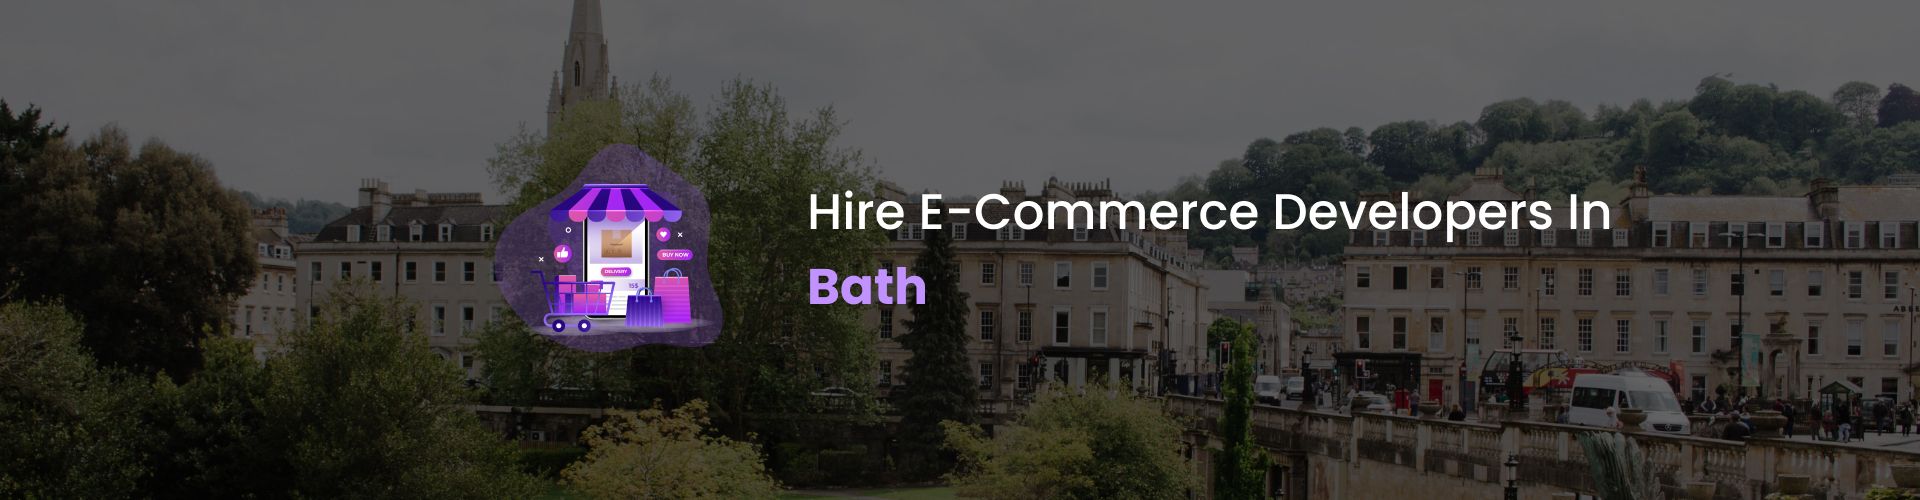 ecommerce developers bath